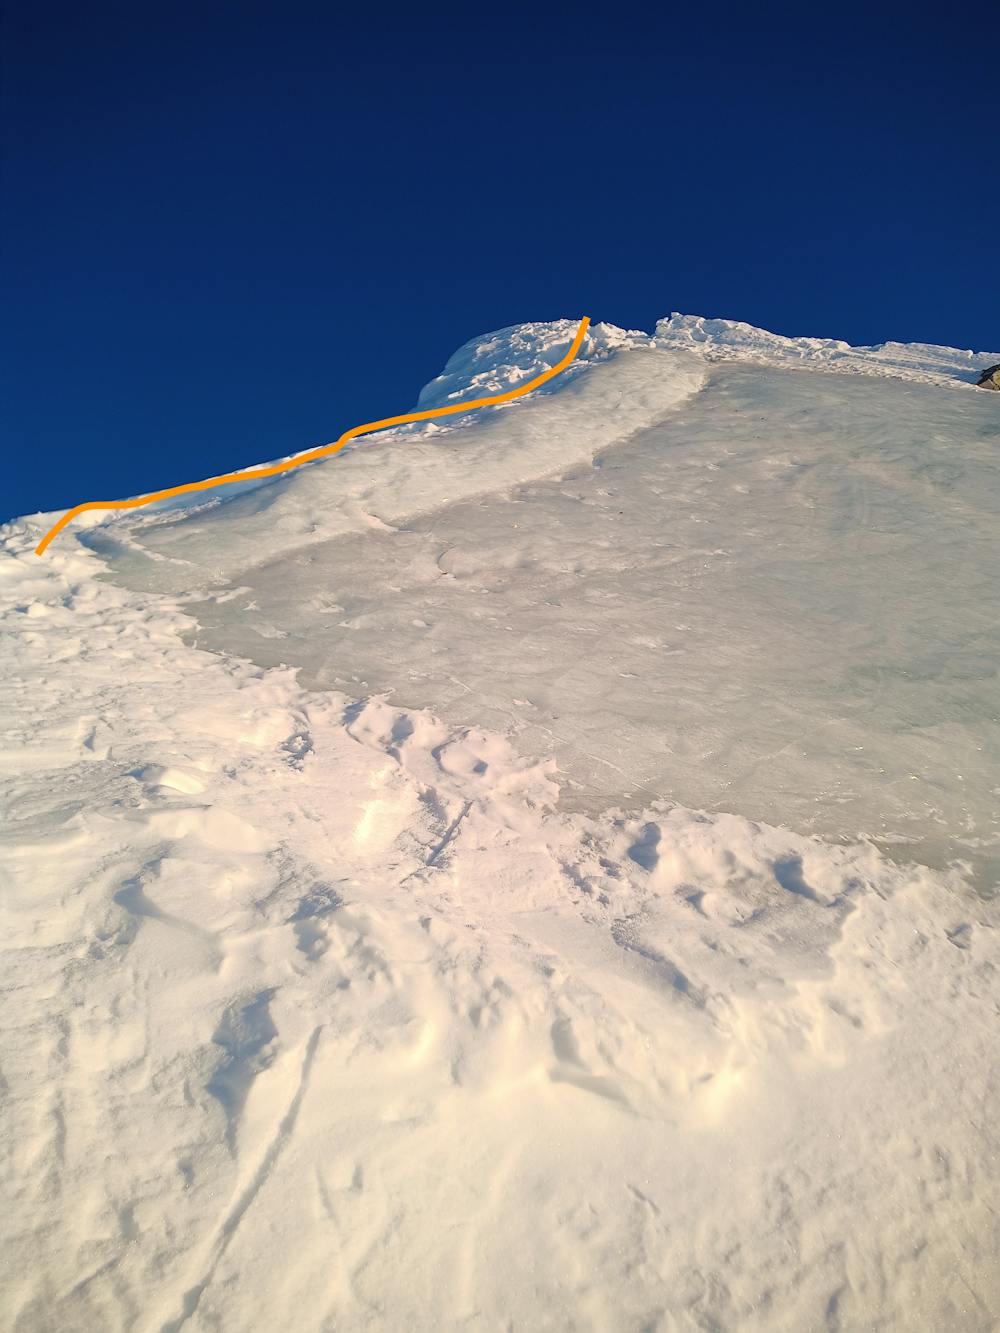 Below the summit, start of Glacier du Milieu decent avec 10m of ice